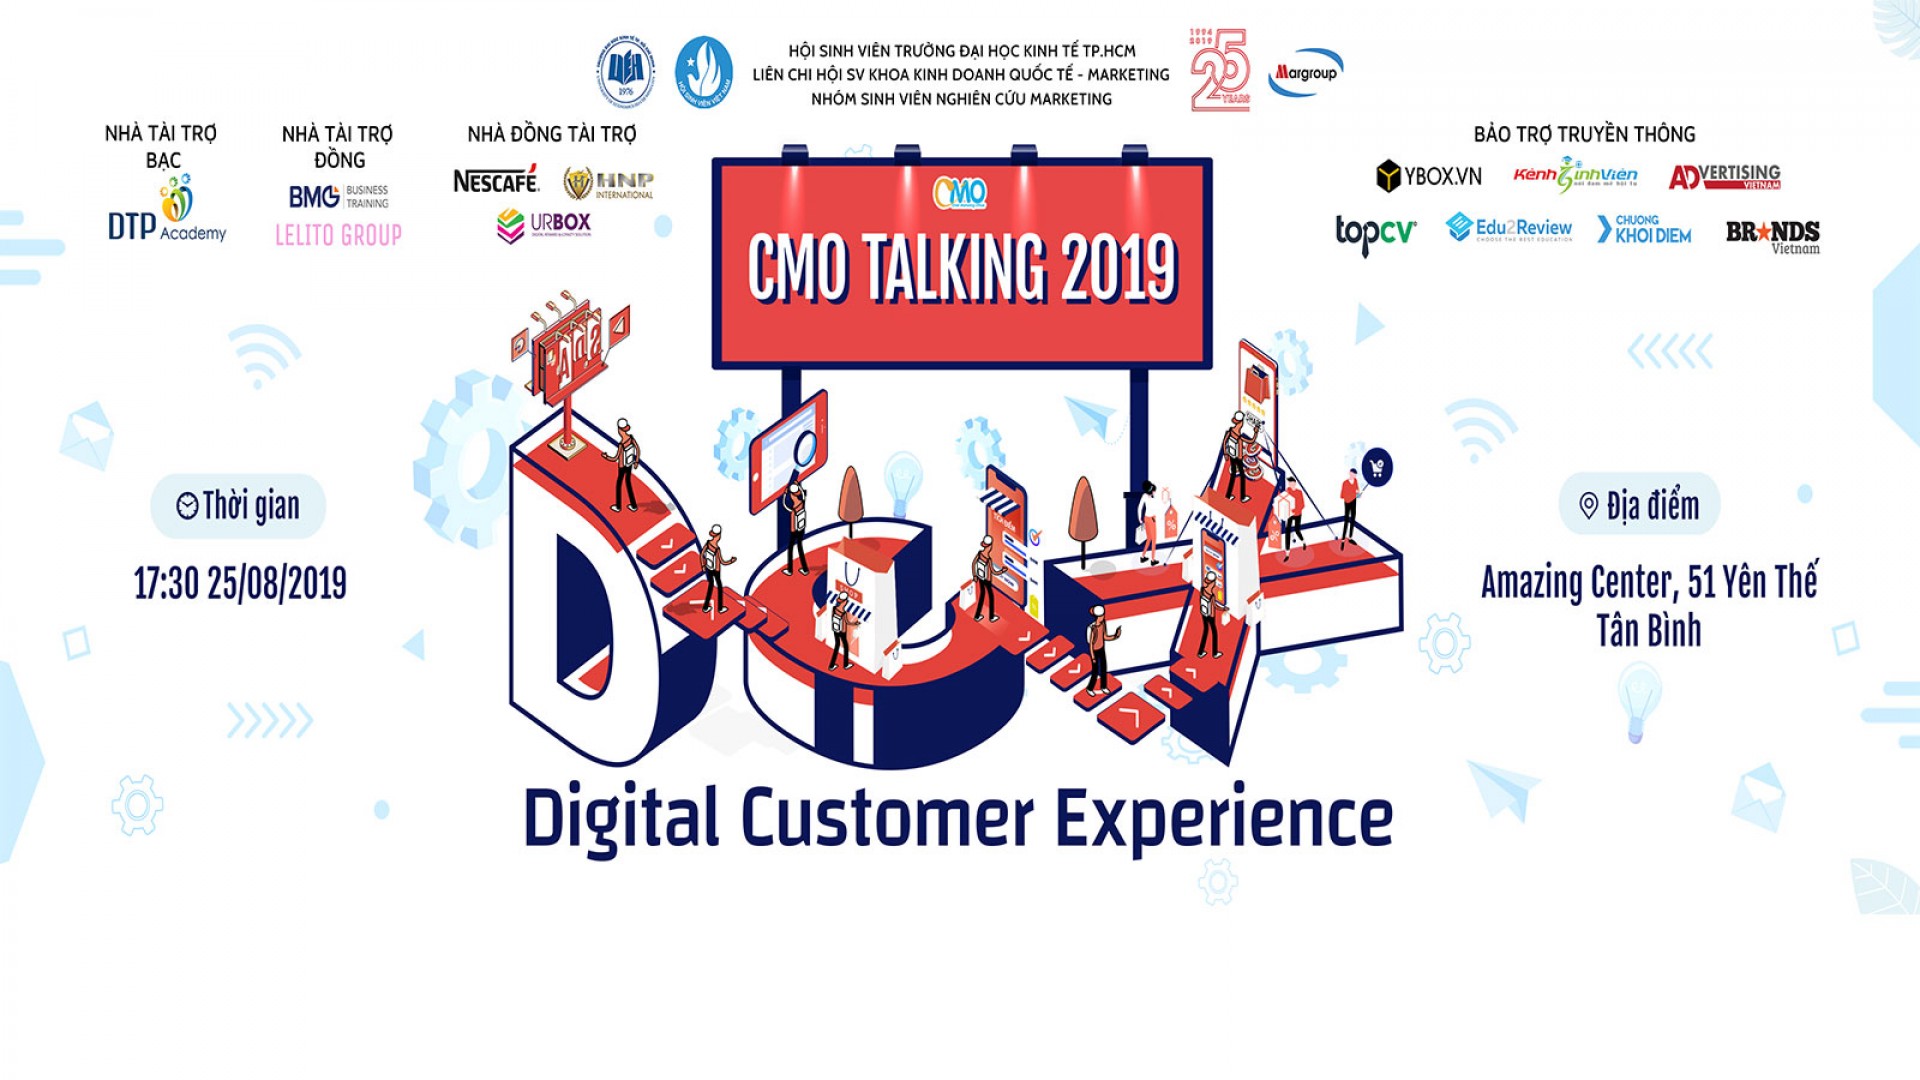 CMO TALKING 2019: DIGITAL CUSTOMER EXPERIENCE